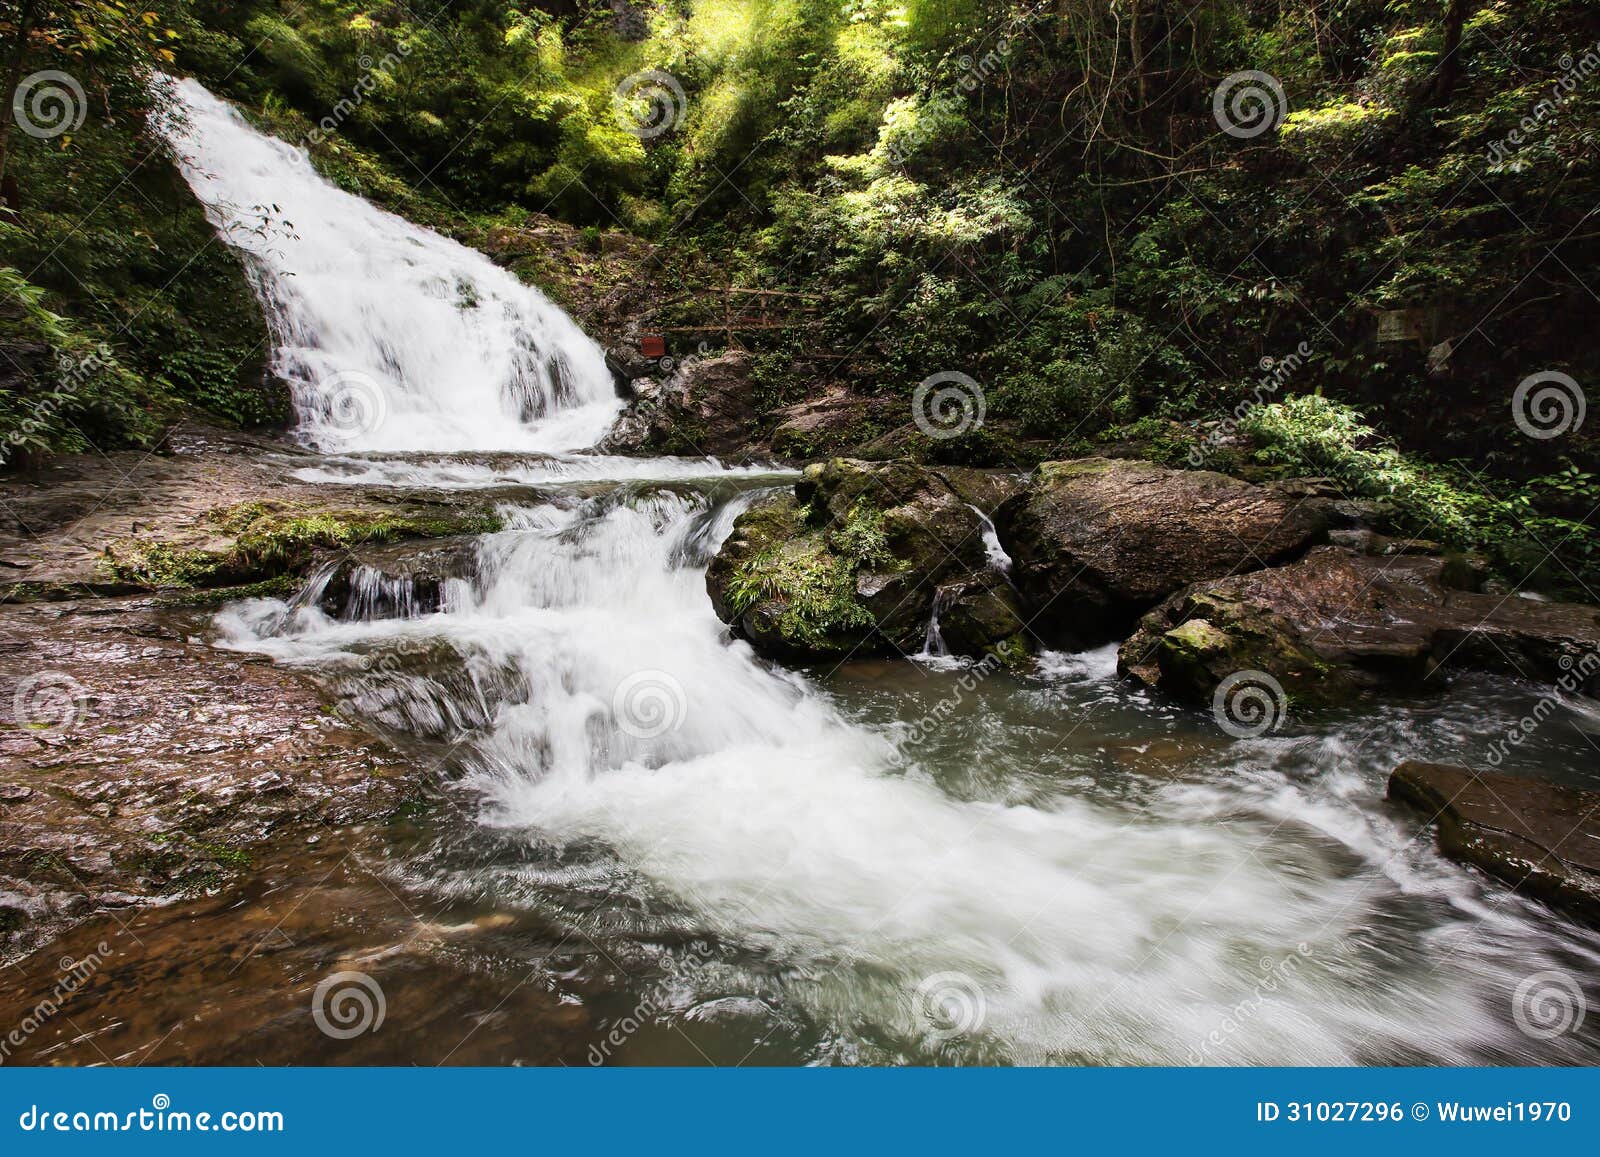 ravine stream in the black mountain valley